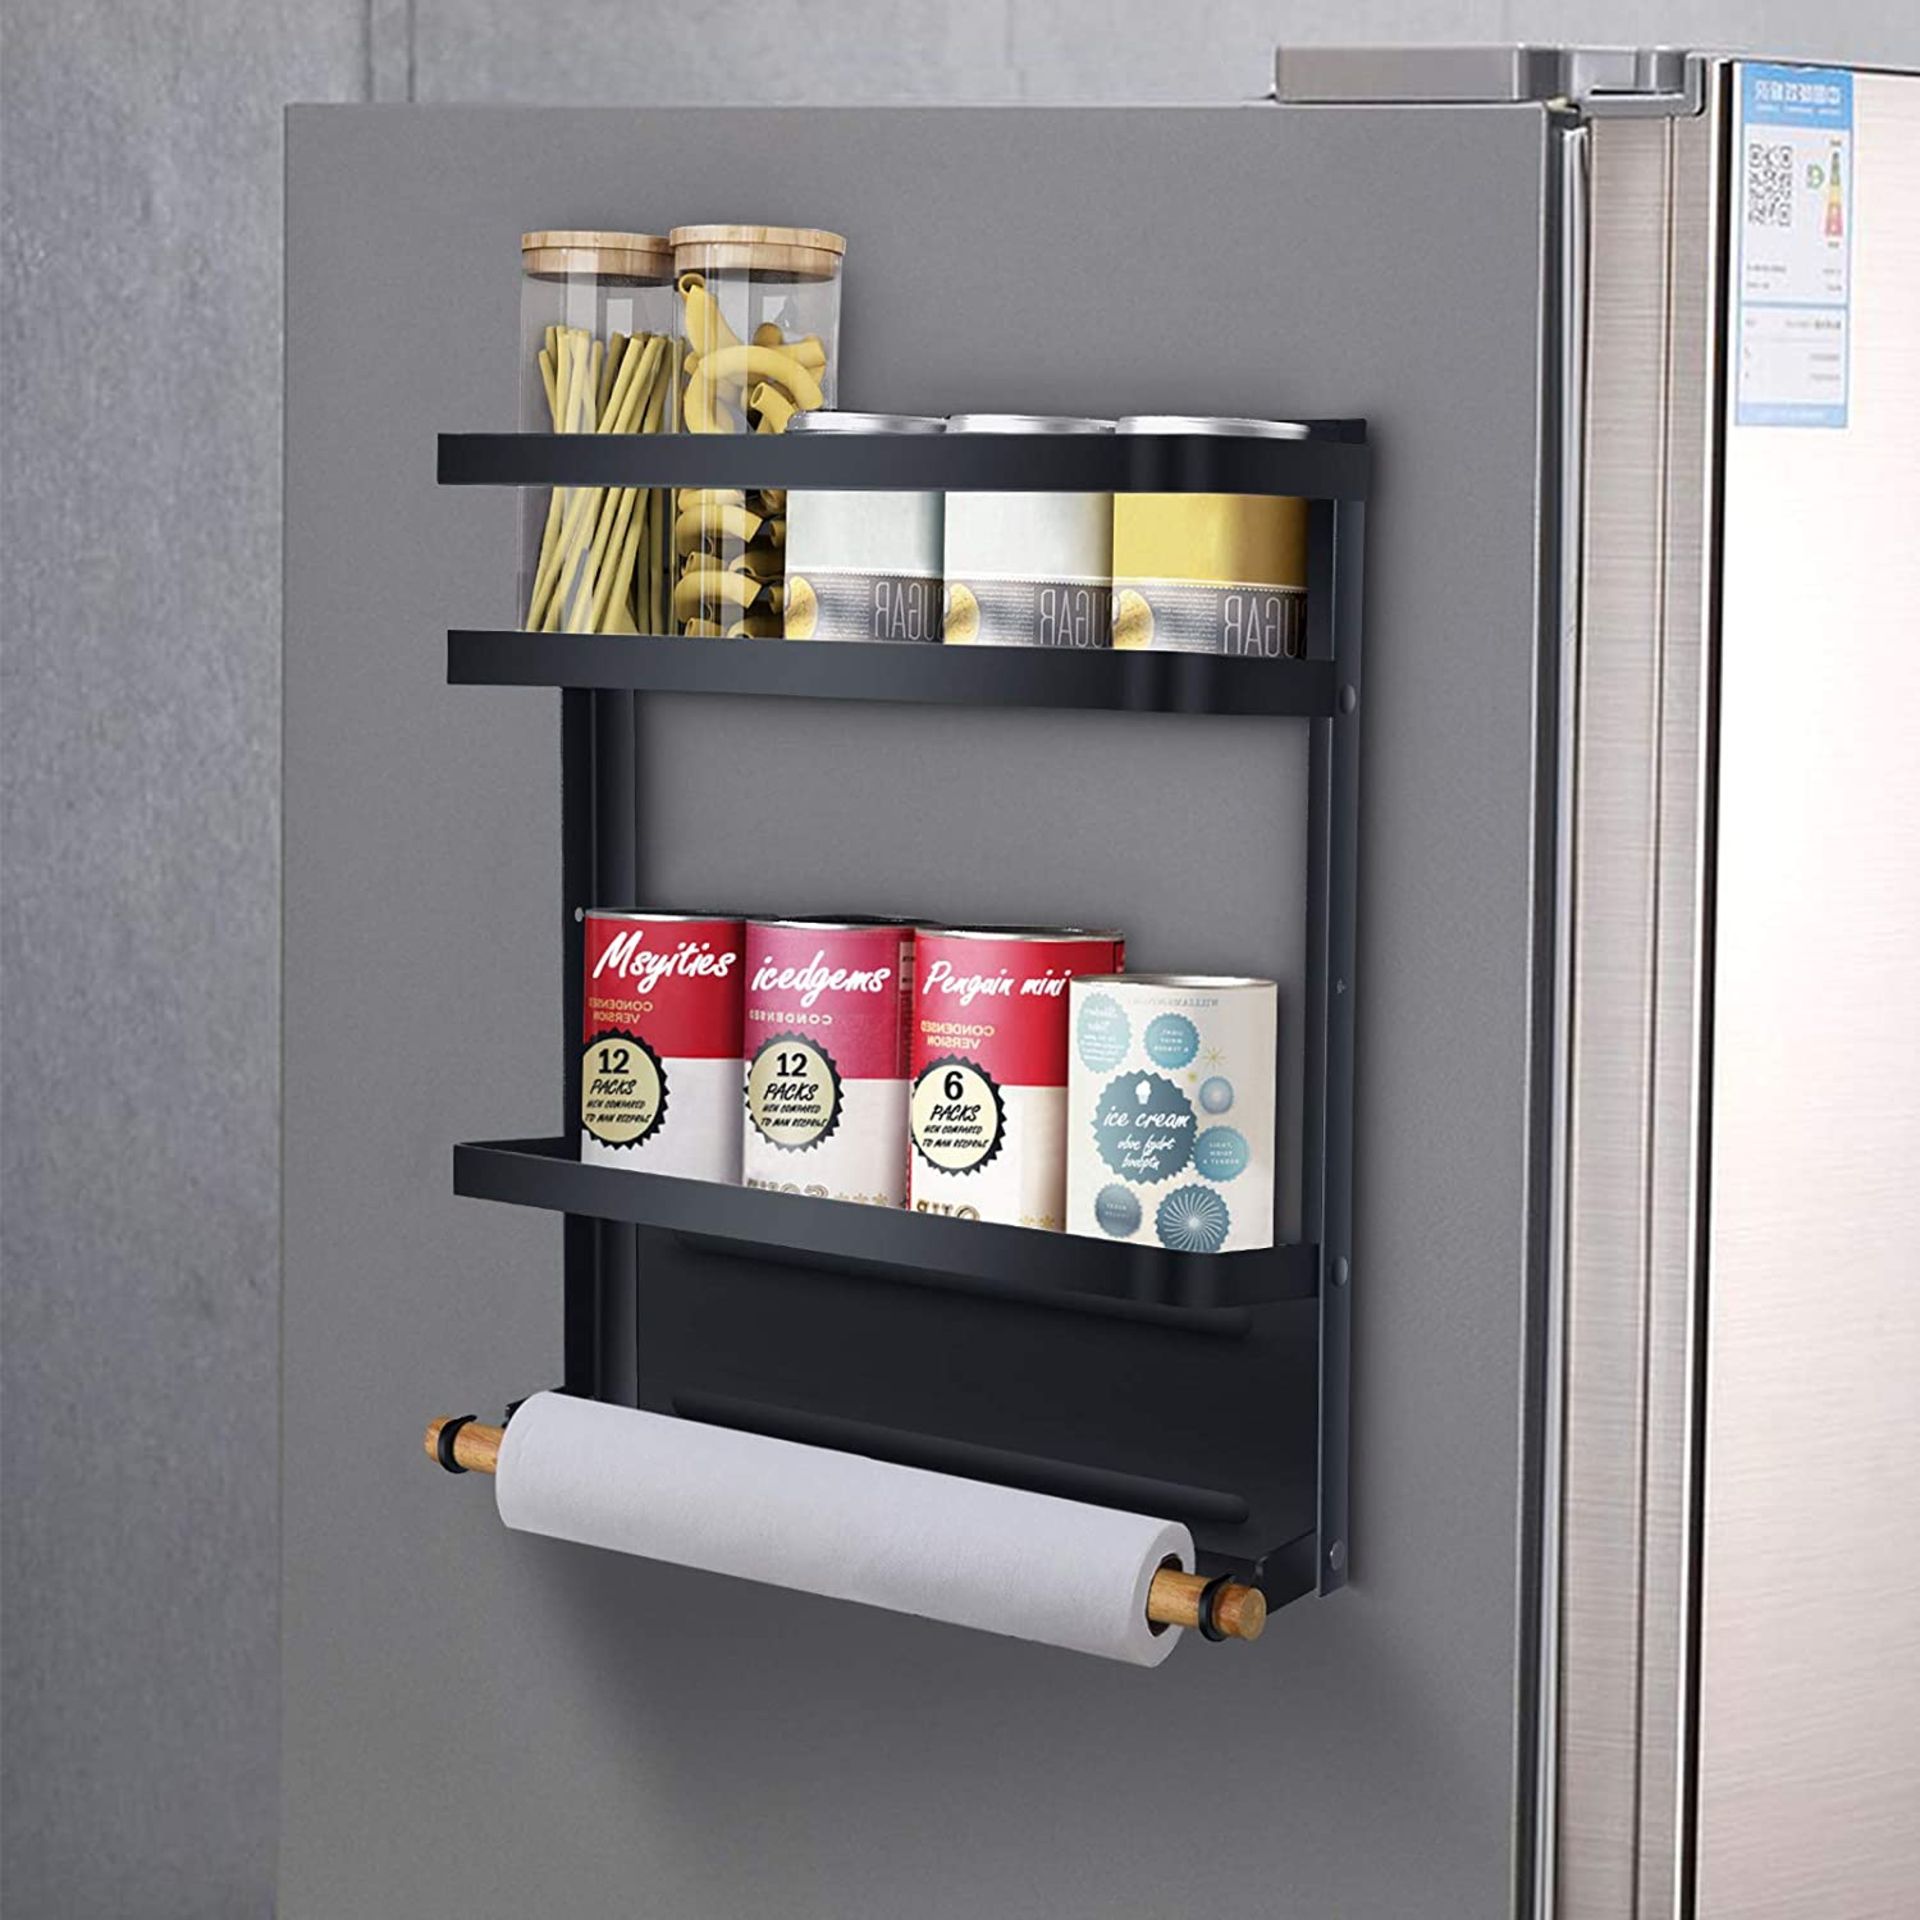 Magnetic Fridge Spice Rack Organiser Rack 2 Tier Refrigerator With Paper Towel Holder RRP £19.99 e..